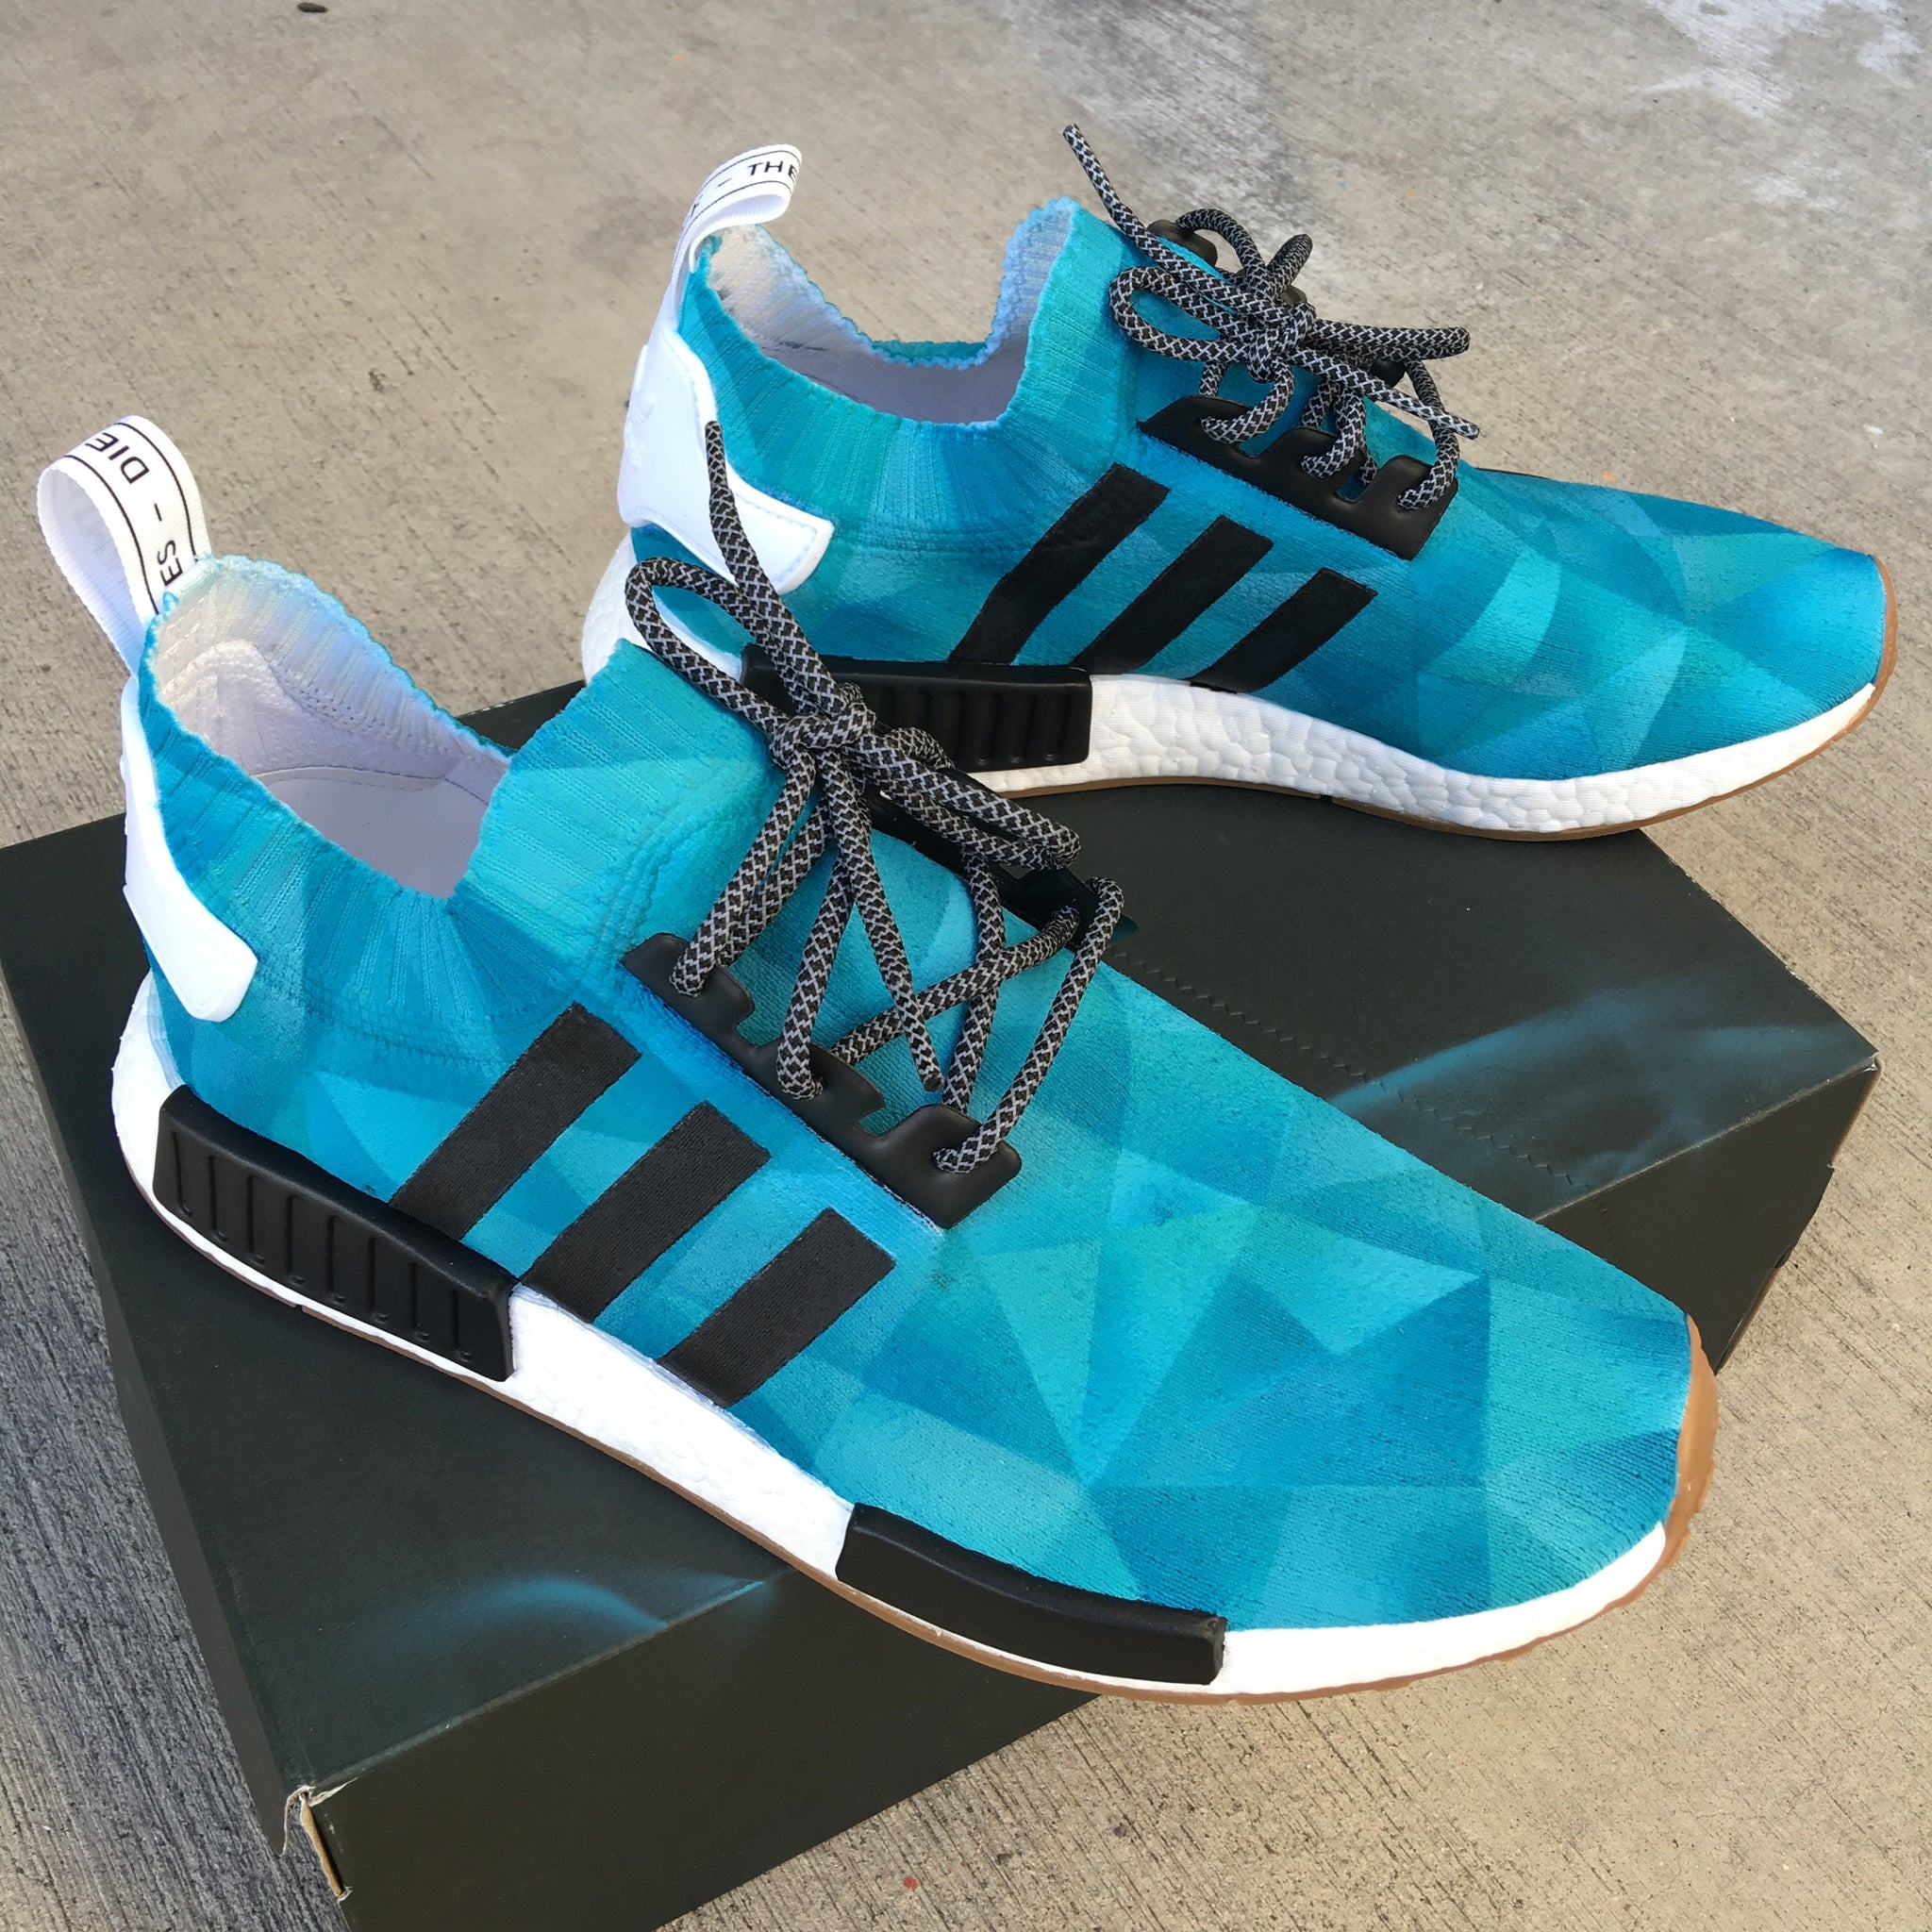 Custom Painted Monochromatic Adidas NMD Sneakers – B Street Shoes